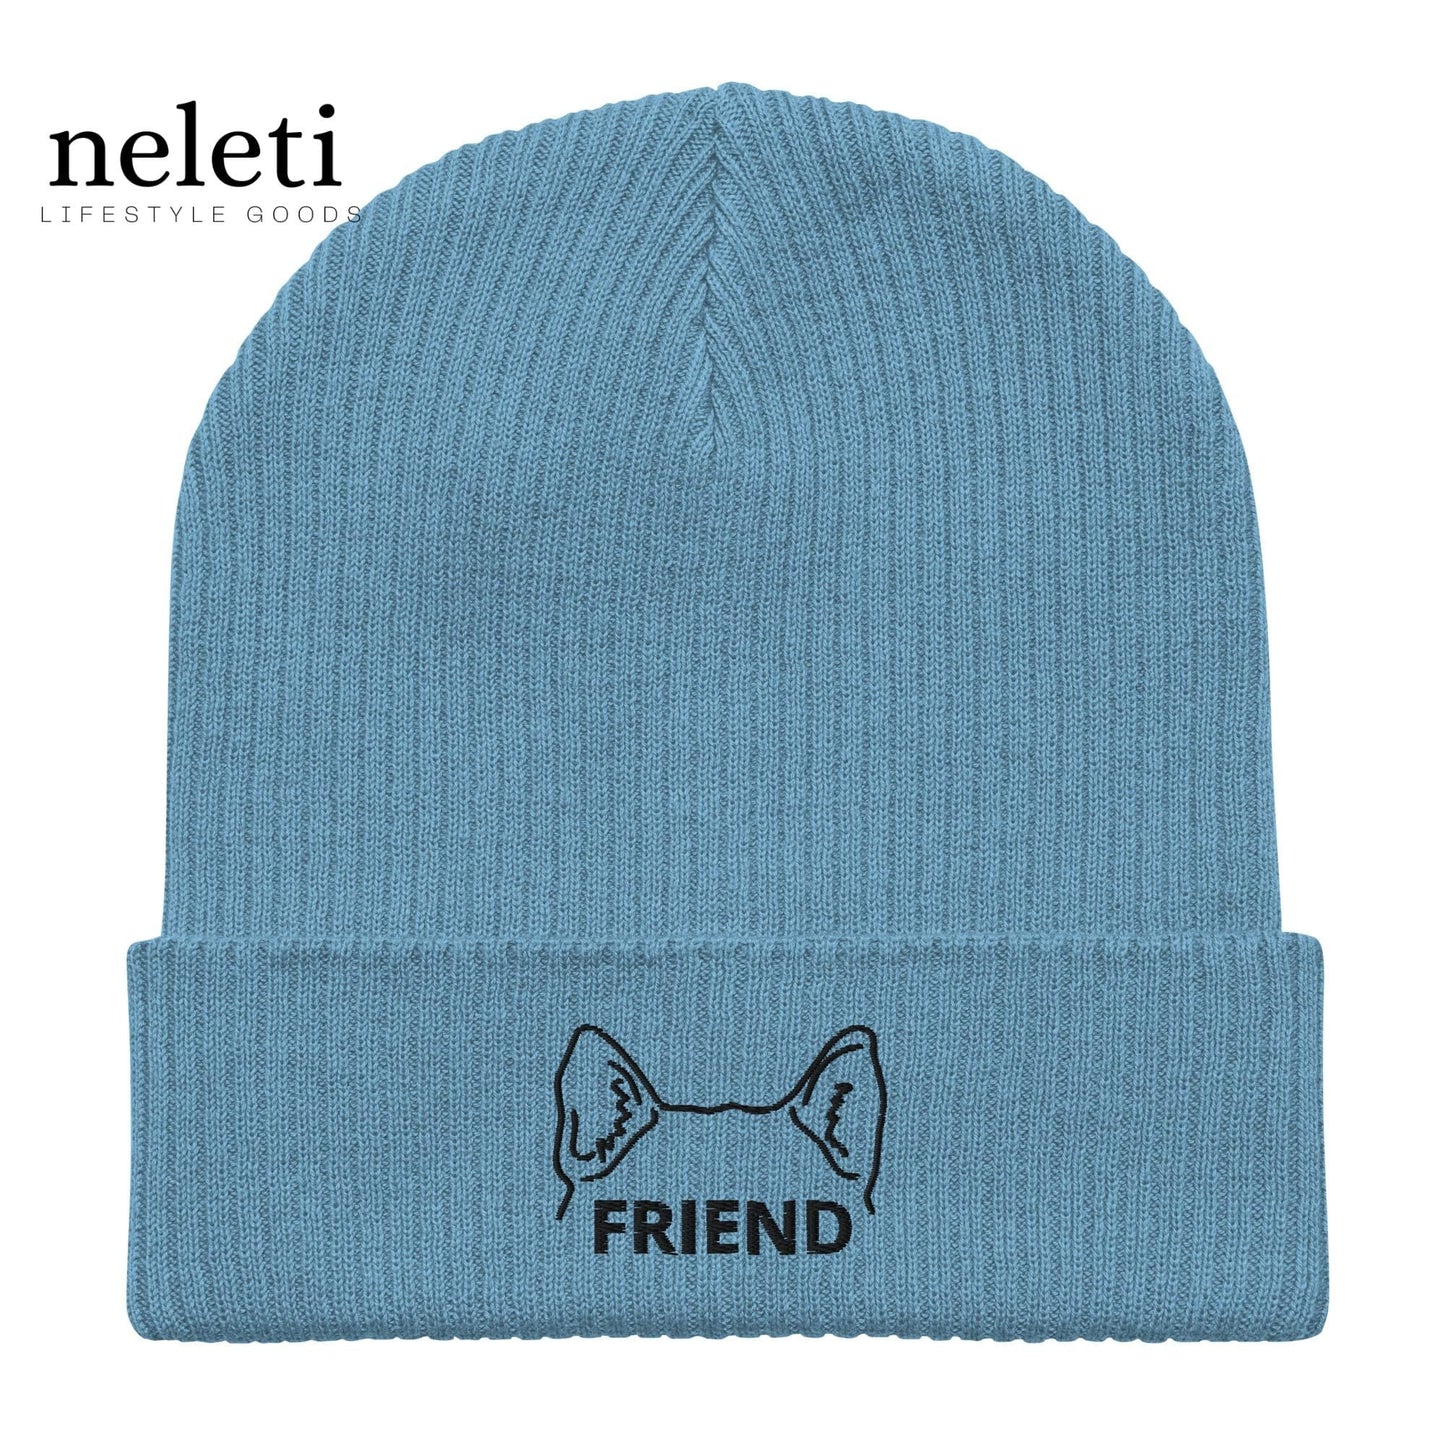 neleti.com-custom-embroidered-blue-beanie-for-dog-lovers